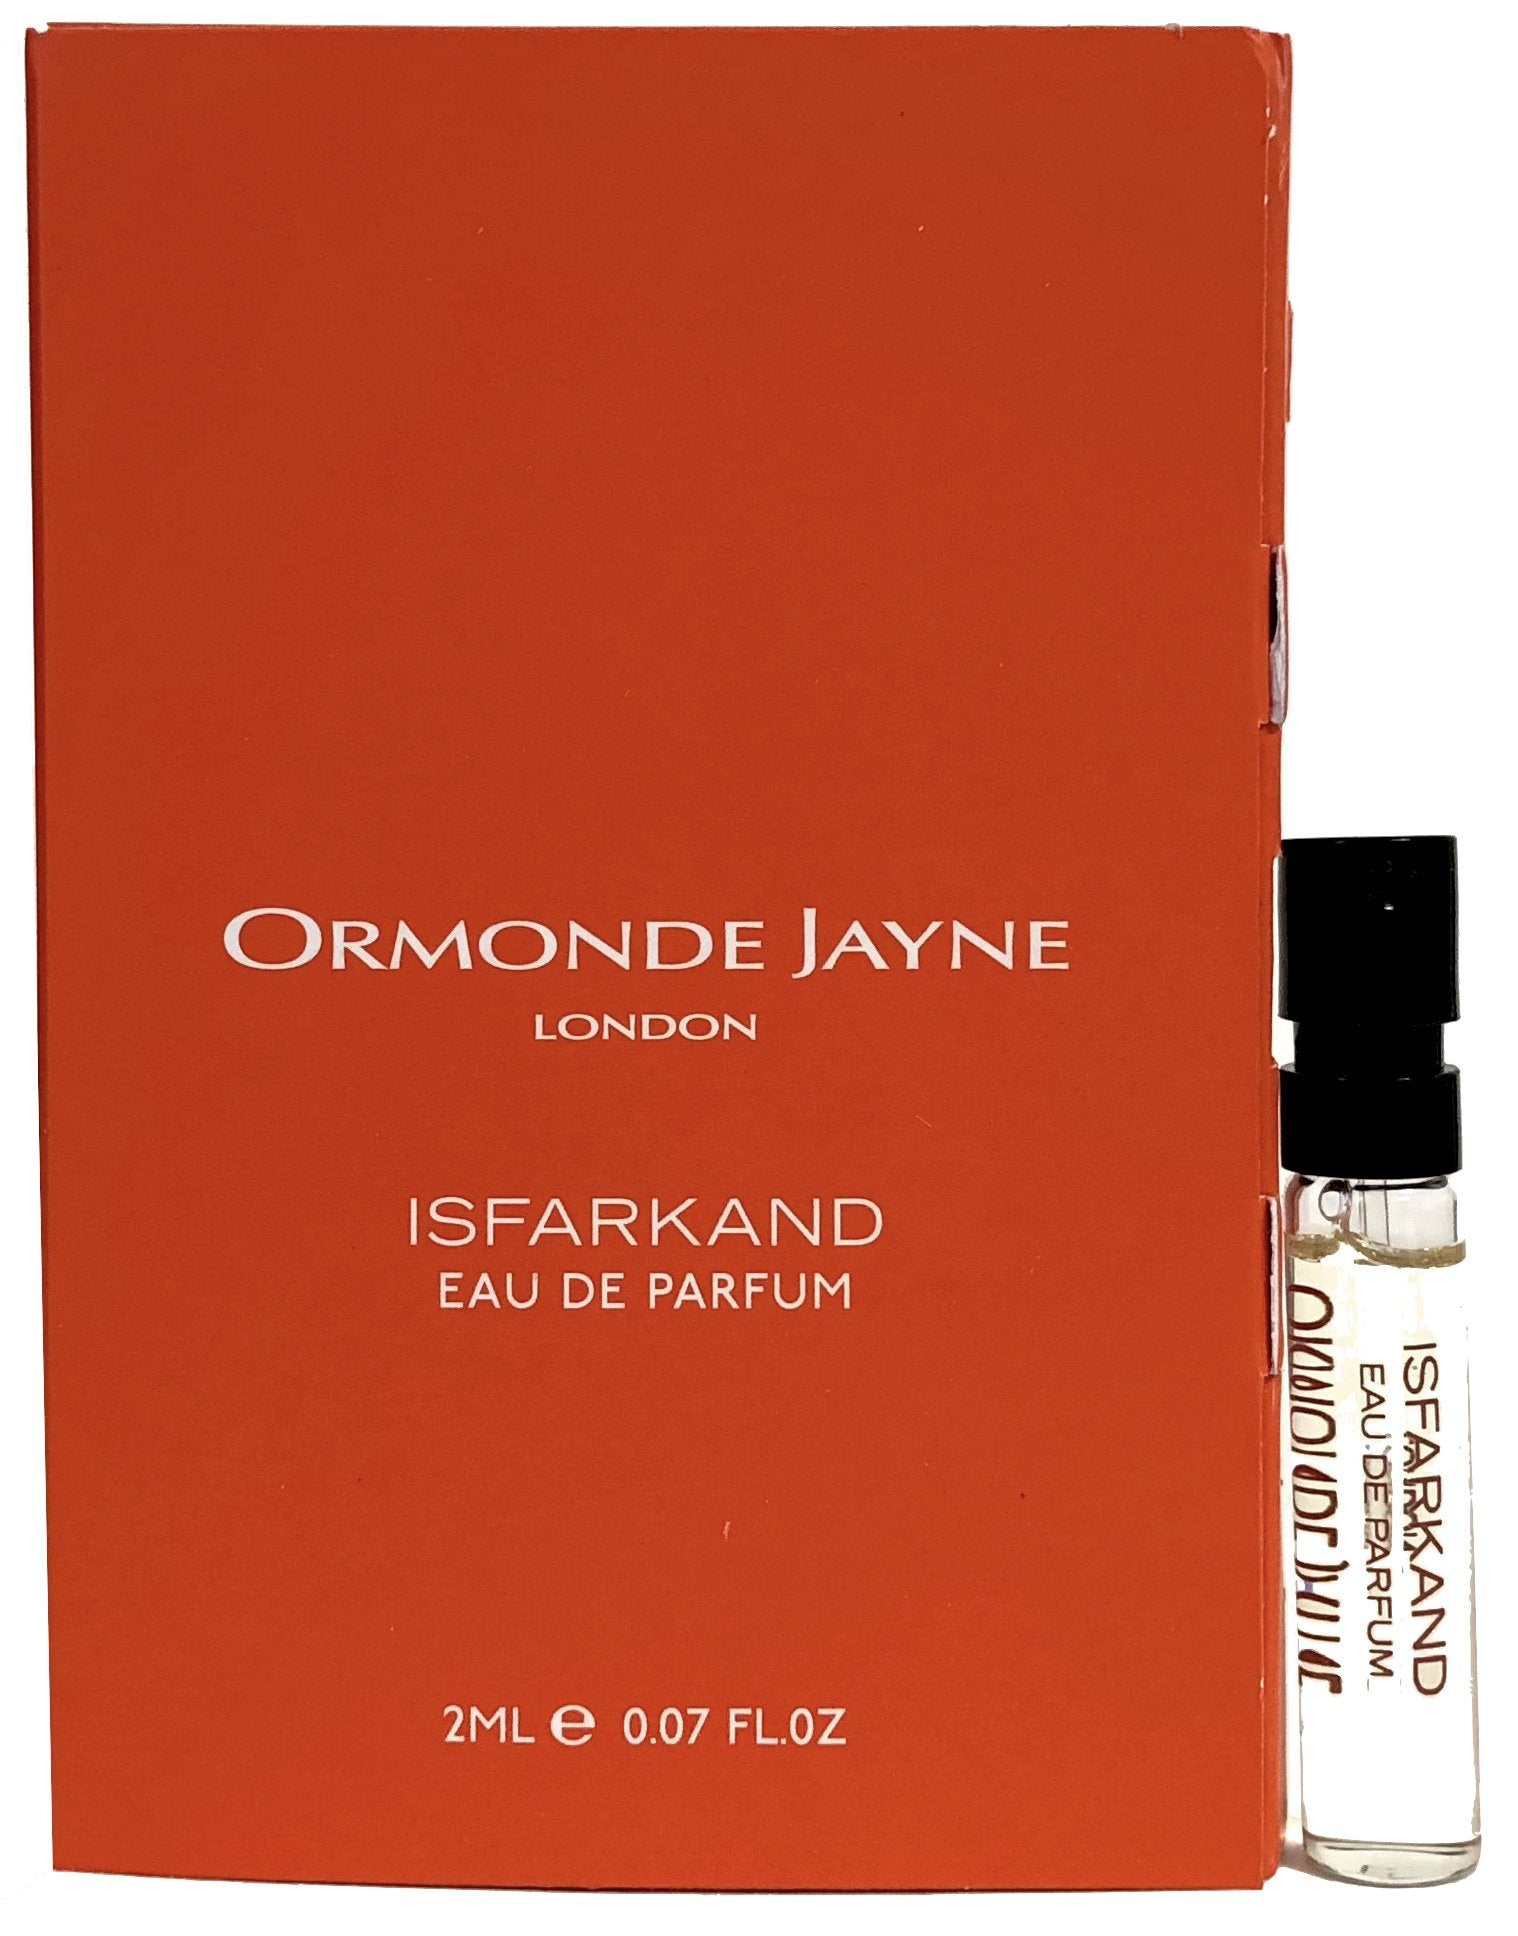 Ormonde Jayne Isfarkand 2ml official perfume samples